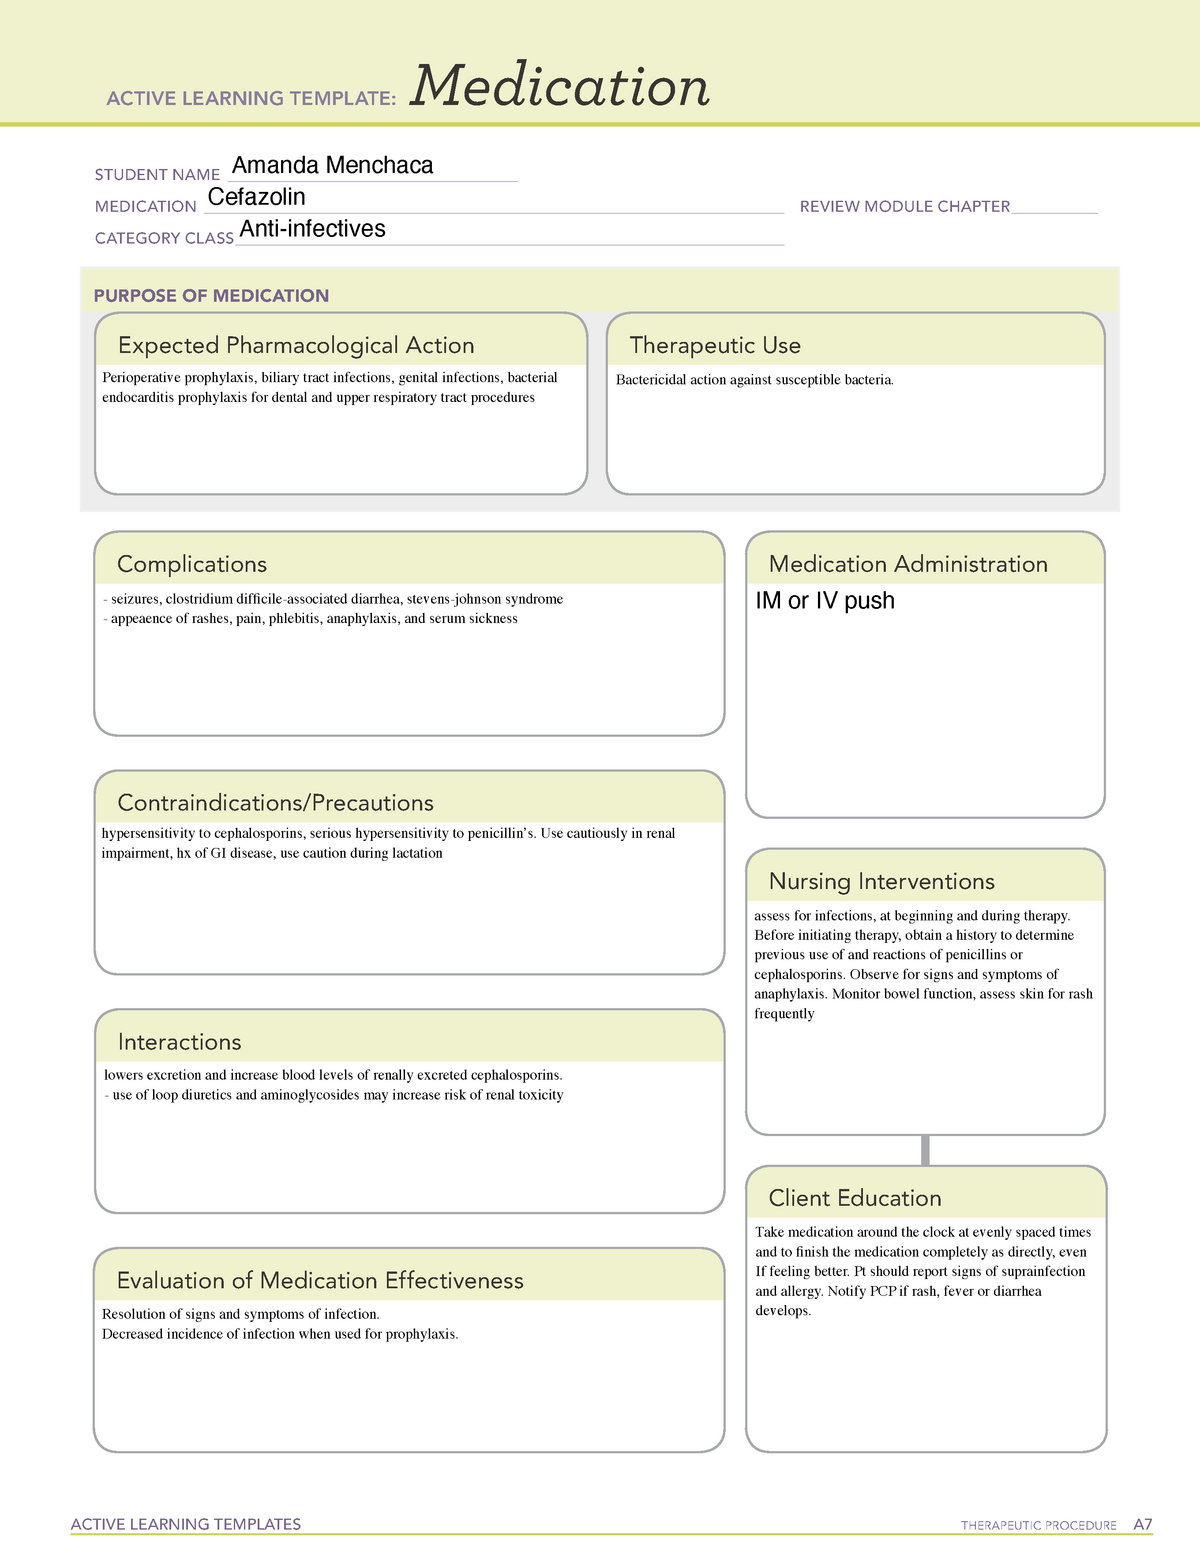 Cefazolin-MED - ATI medication card template - NUR20 With Regard To Medication Card Template